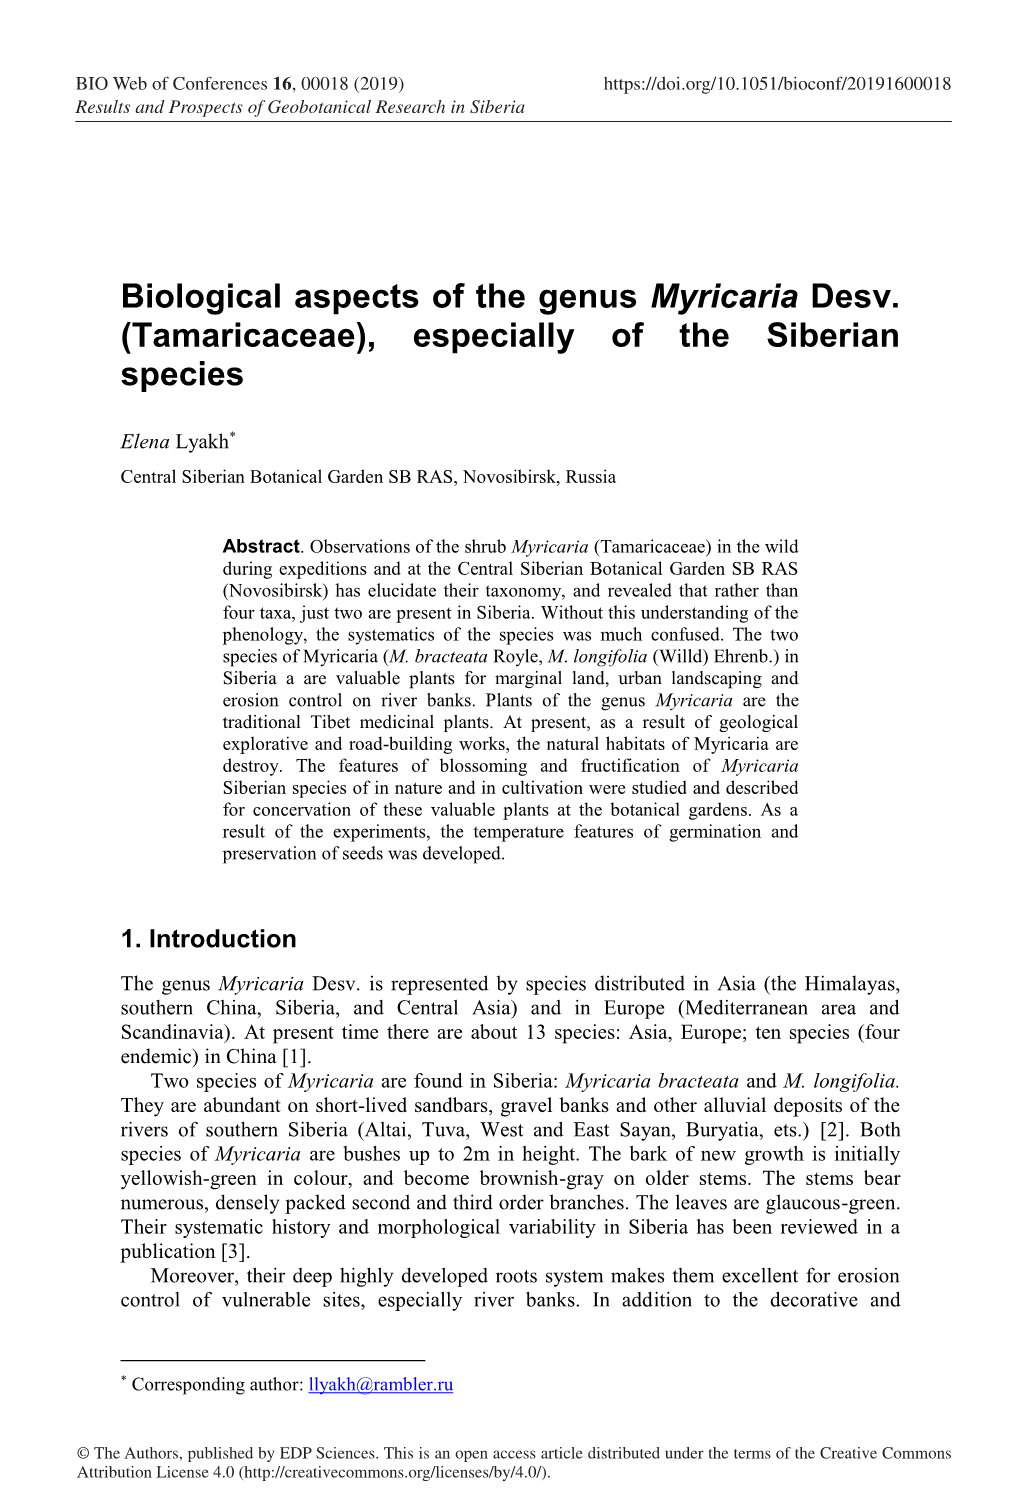 Biological Aspects of the Genus Myricaria Desv. (Tamaricaceae), Especially of the Siberian Species